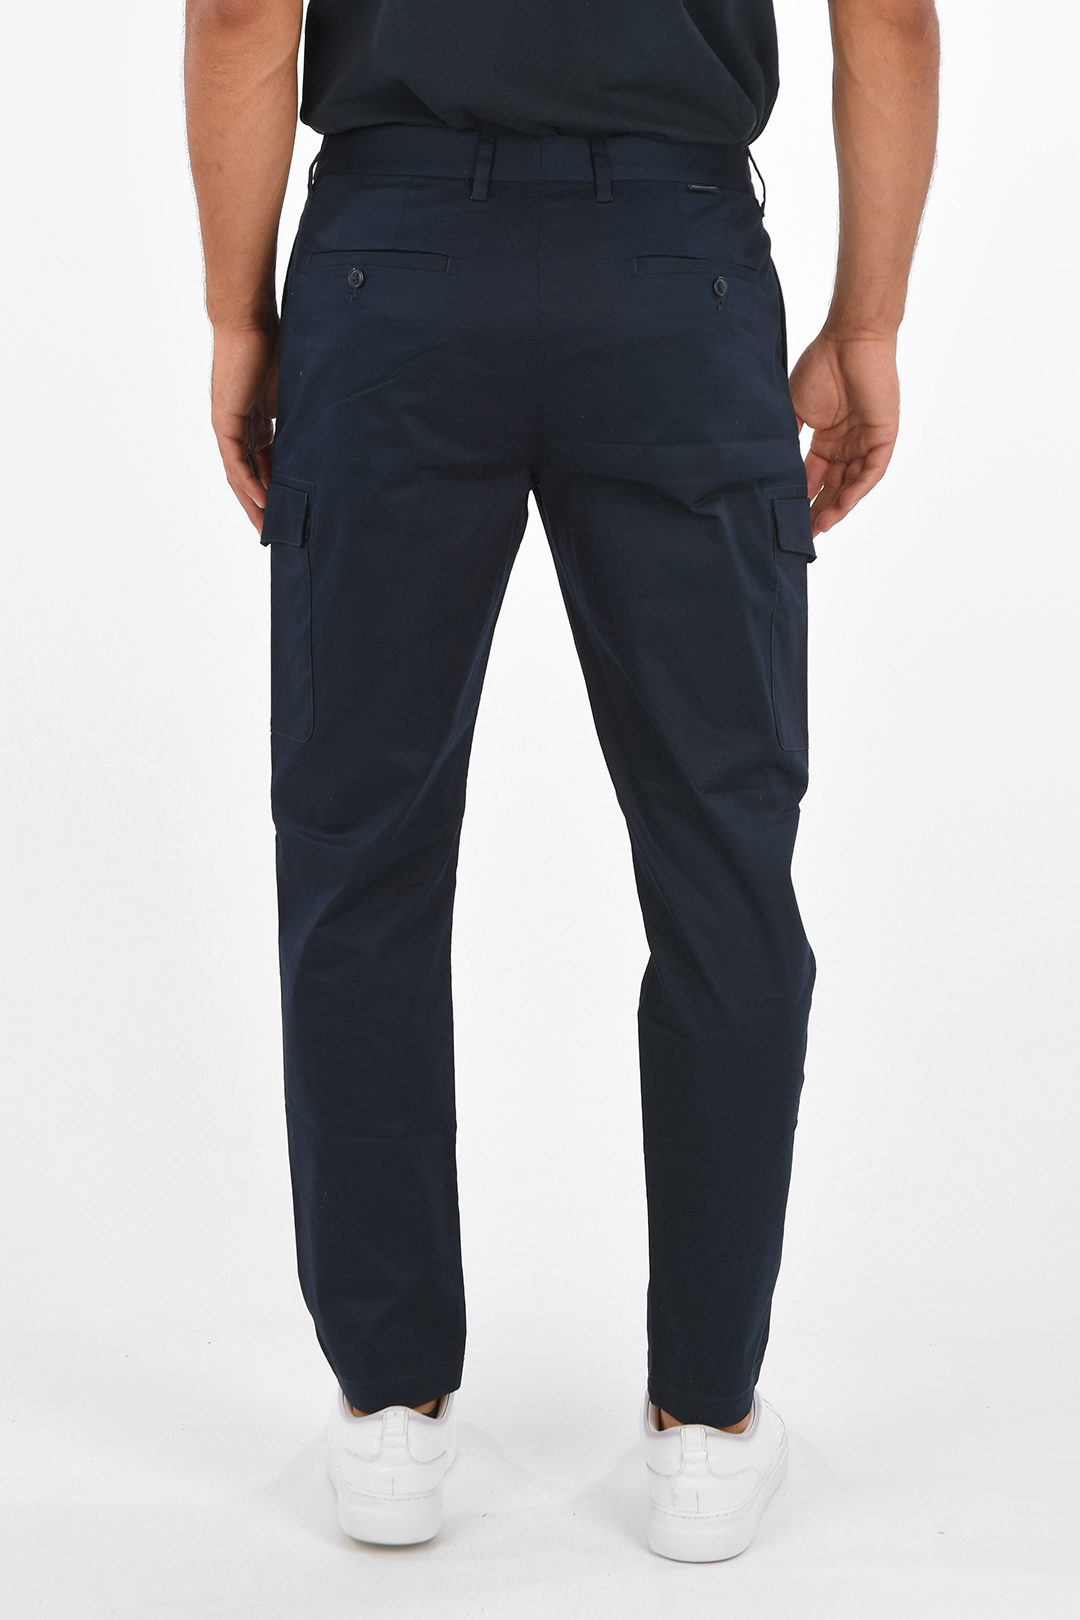 Armani ARMANI EXCHANGE double pleat cargo pants men - Glamood Outlet